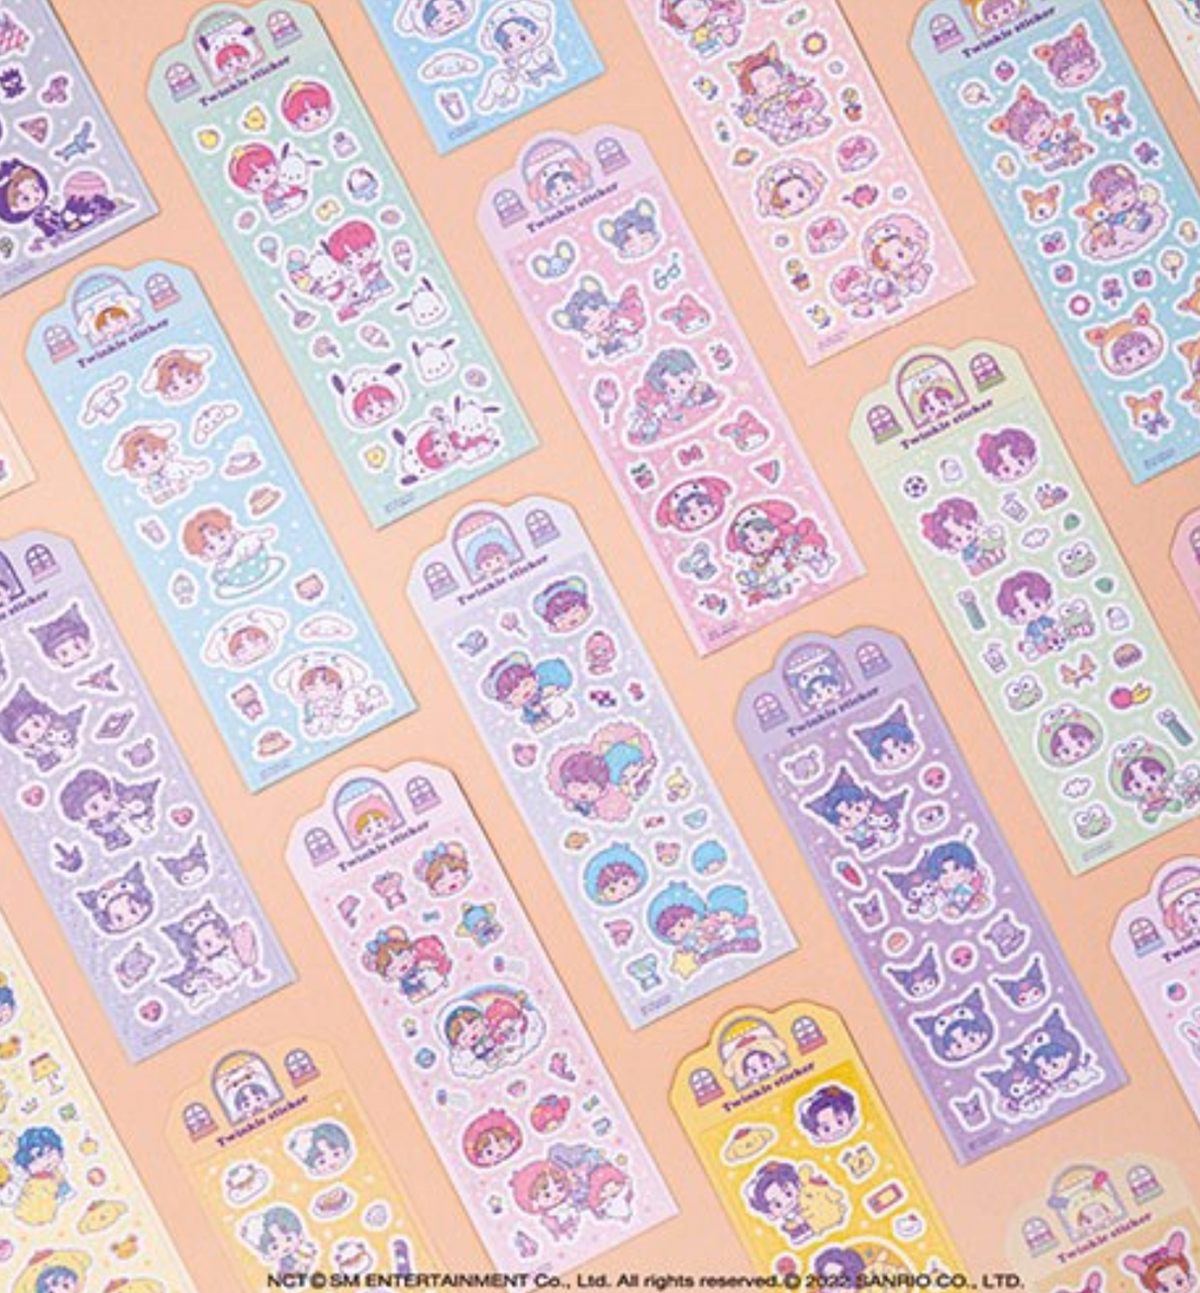 Hannari Japanese Pattern Washi Tape Sticker Roll - Bande